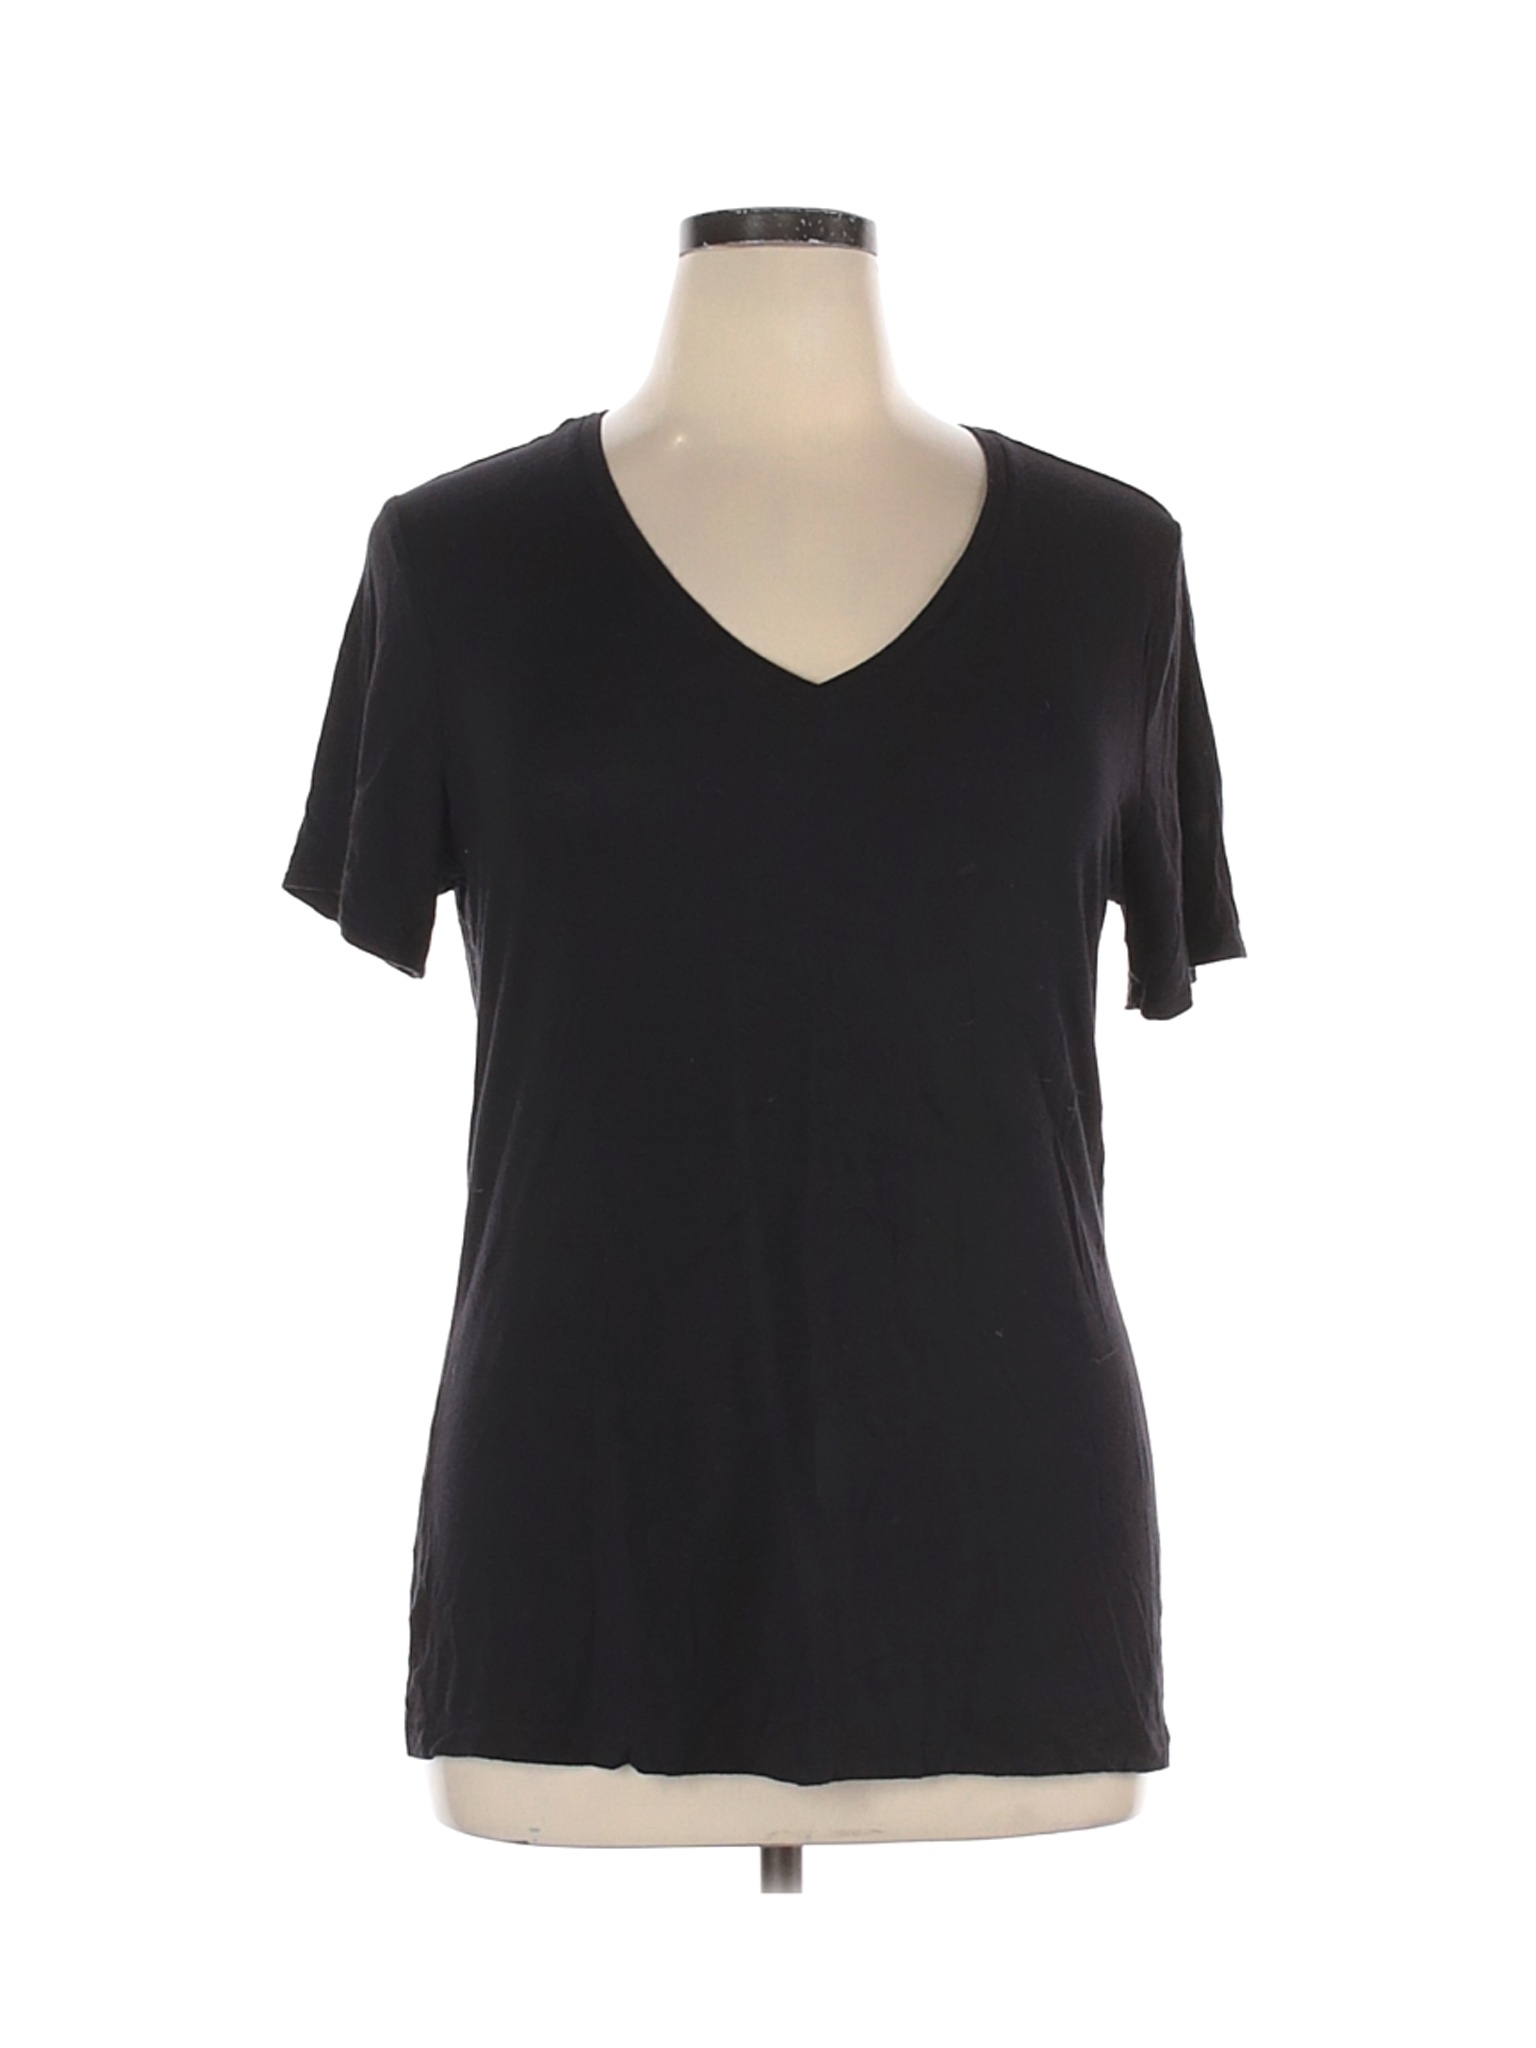 Apt. 9 Women Black Short Sleeve T-Shirt XL | eBay